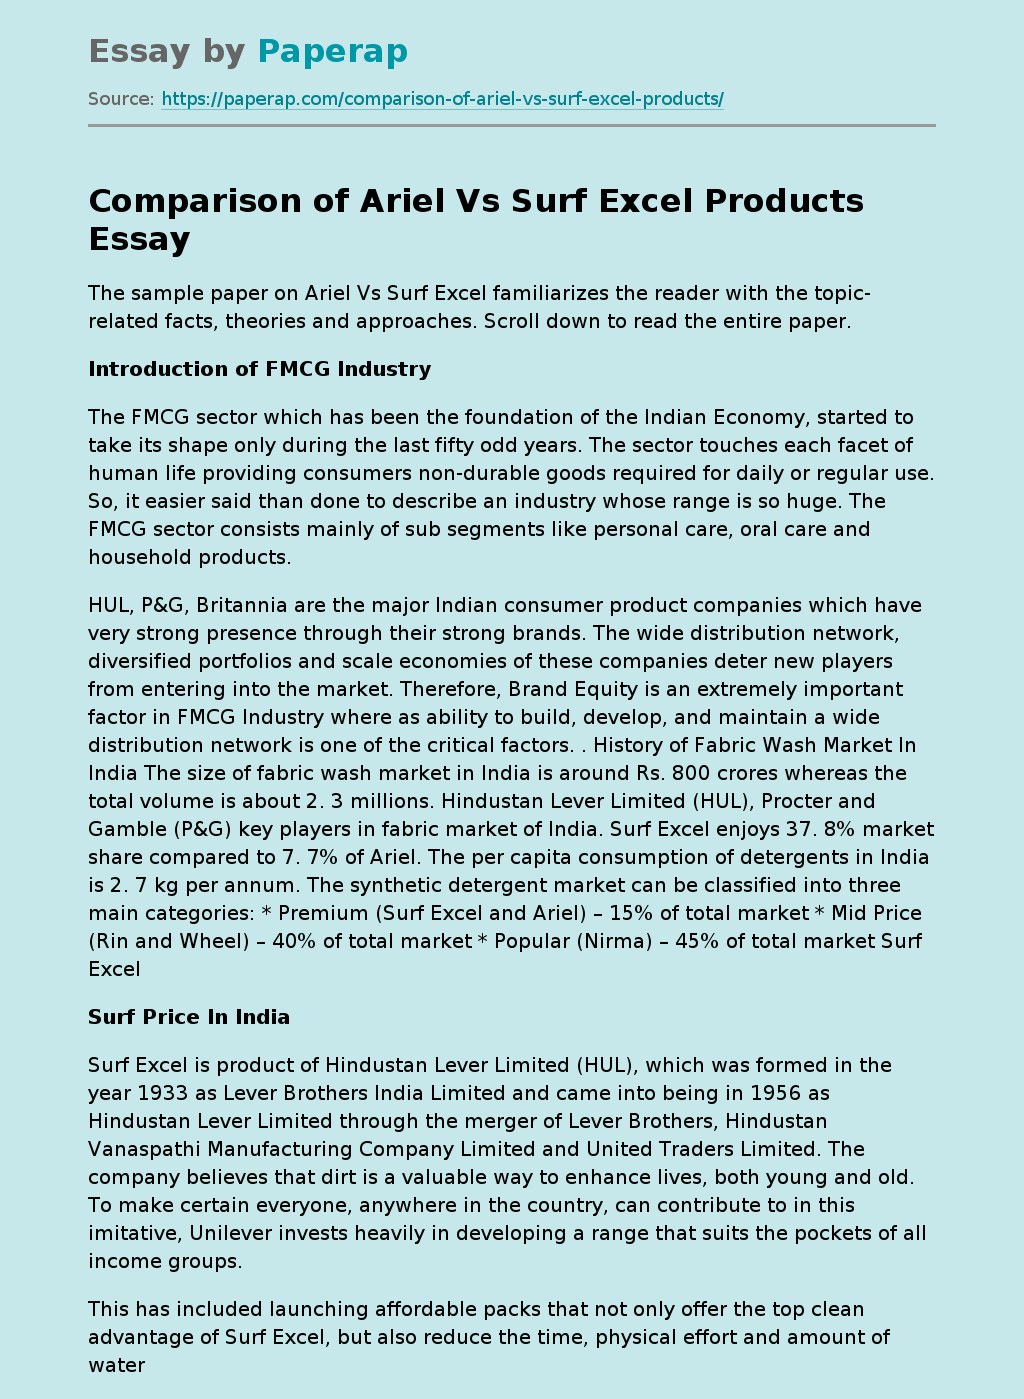 Comparison of Ariel Vs Surf Excel Products